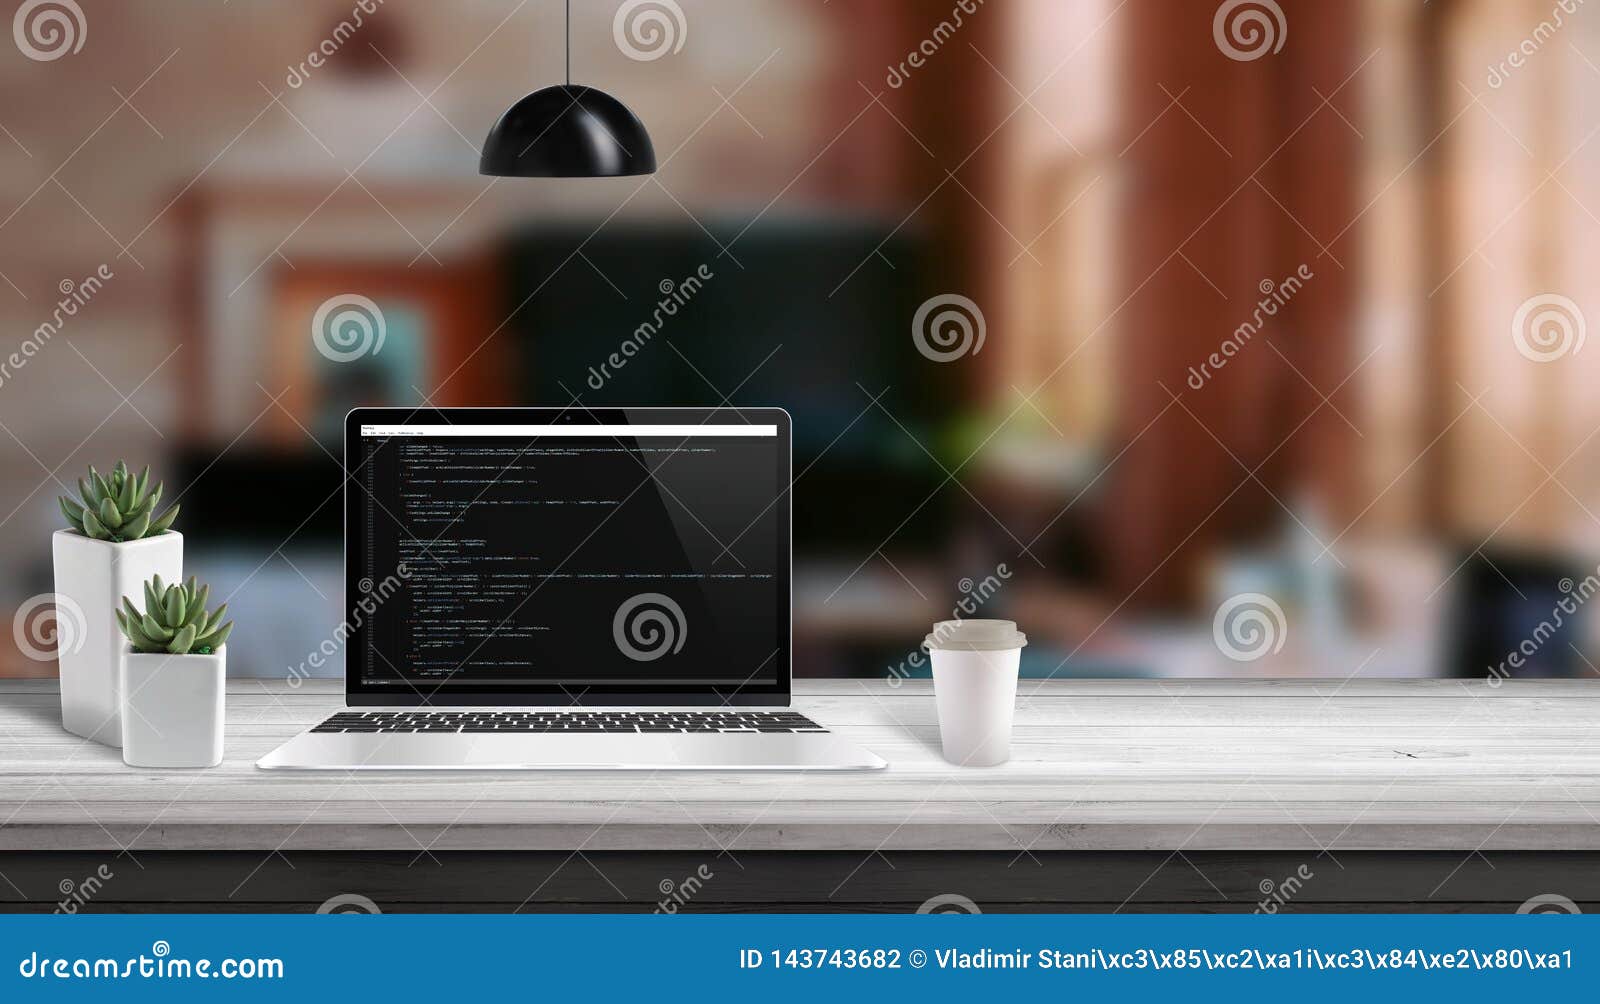 web development studio concept. laptop vith script code editor